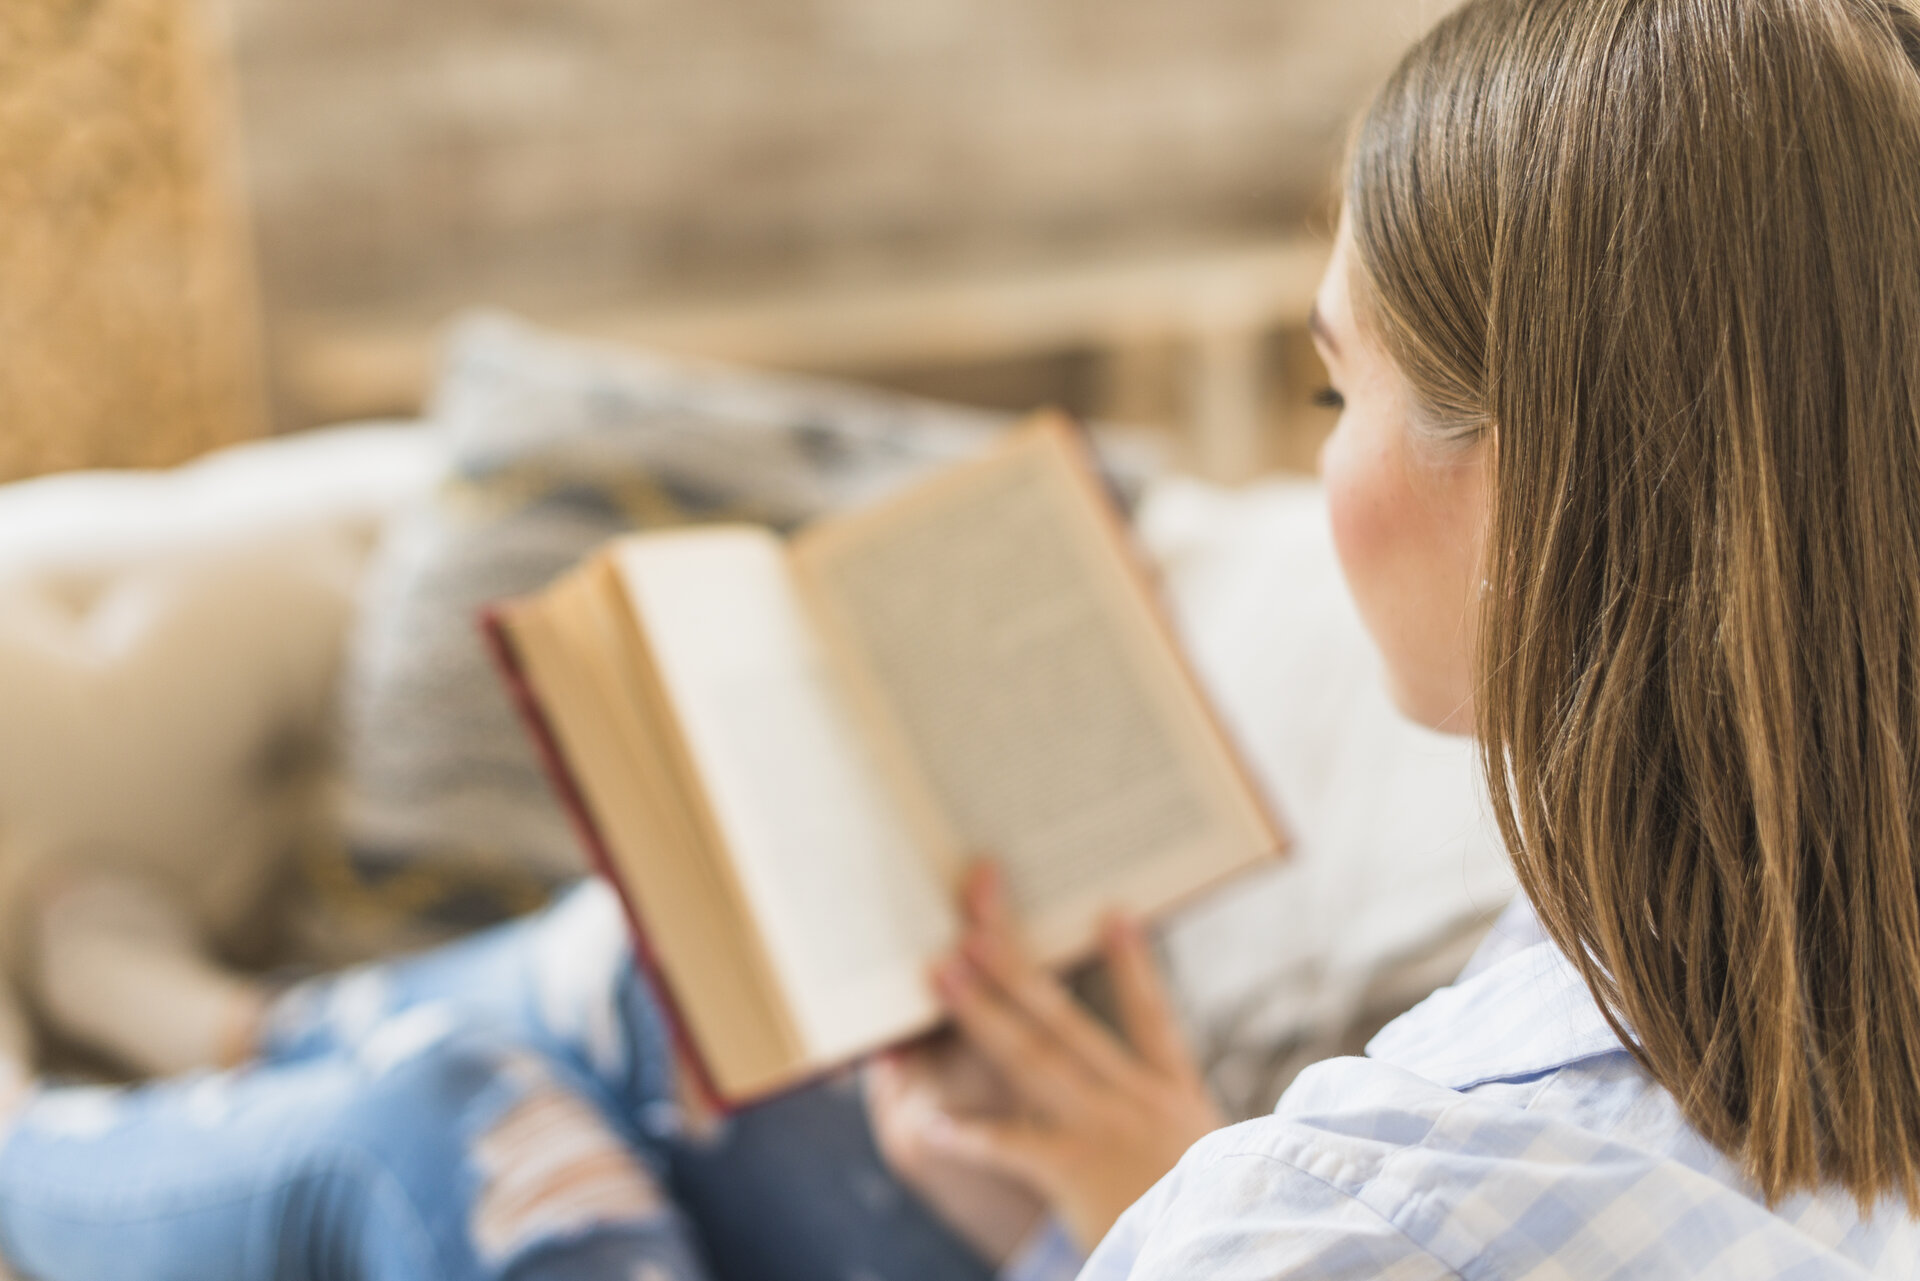 Libros para adolescentes: Las lecturas que están marcando tendencia